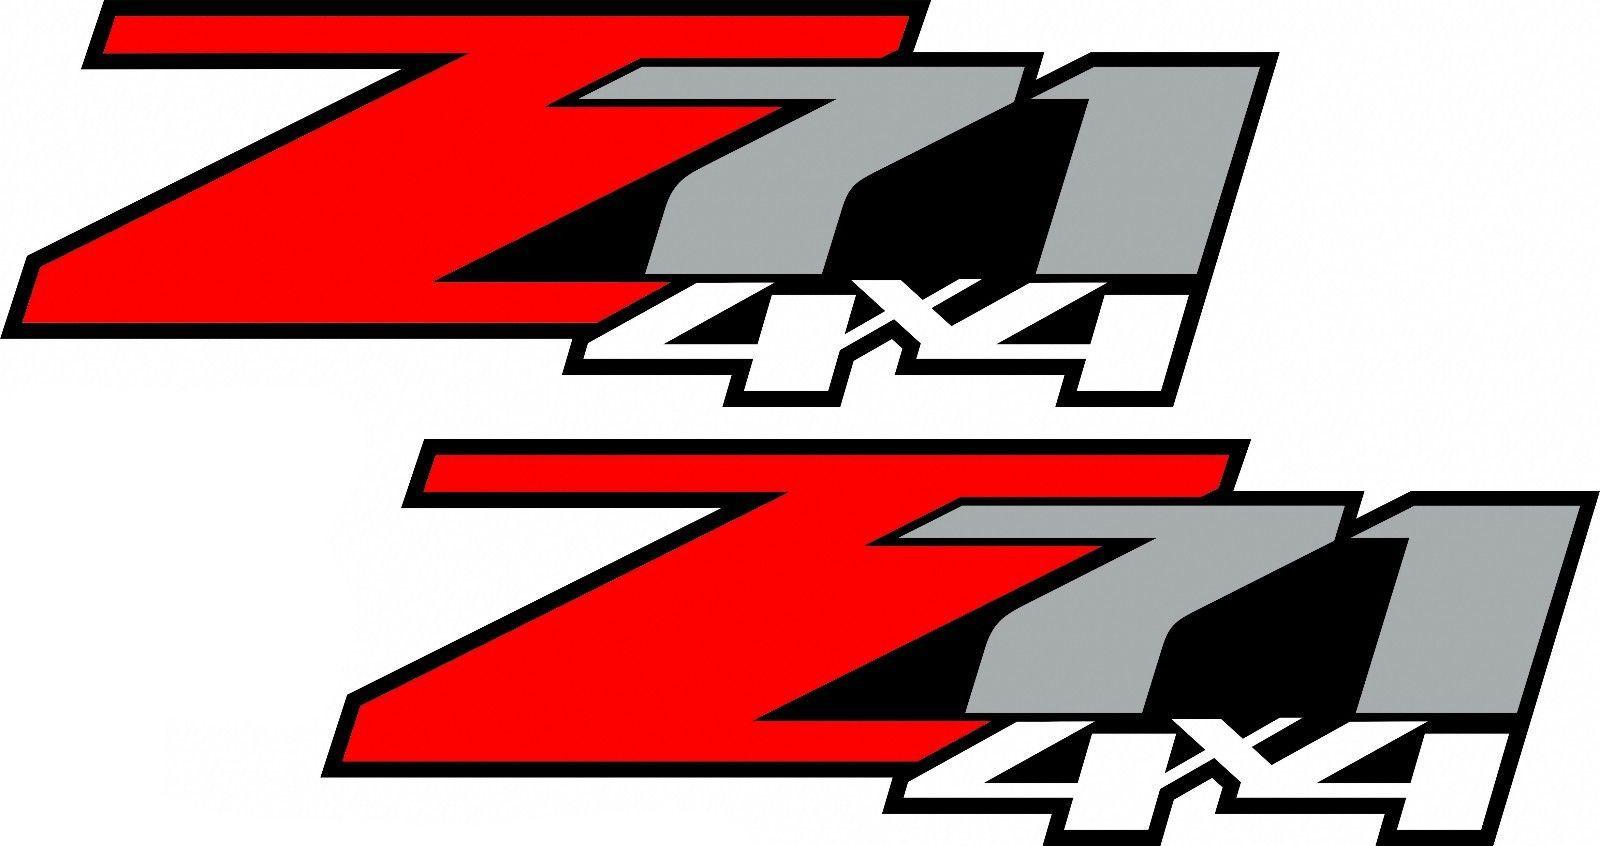 GMC Z71 Logo - Product: 2 Chevy Z71 Off Road 4x4 Truck Decal Sticker X2